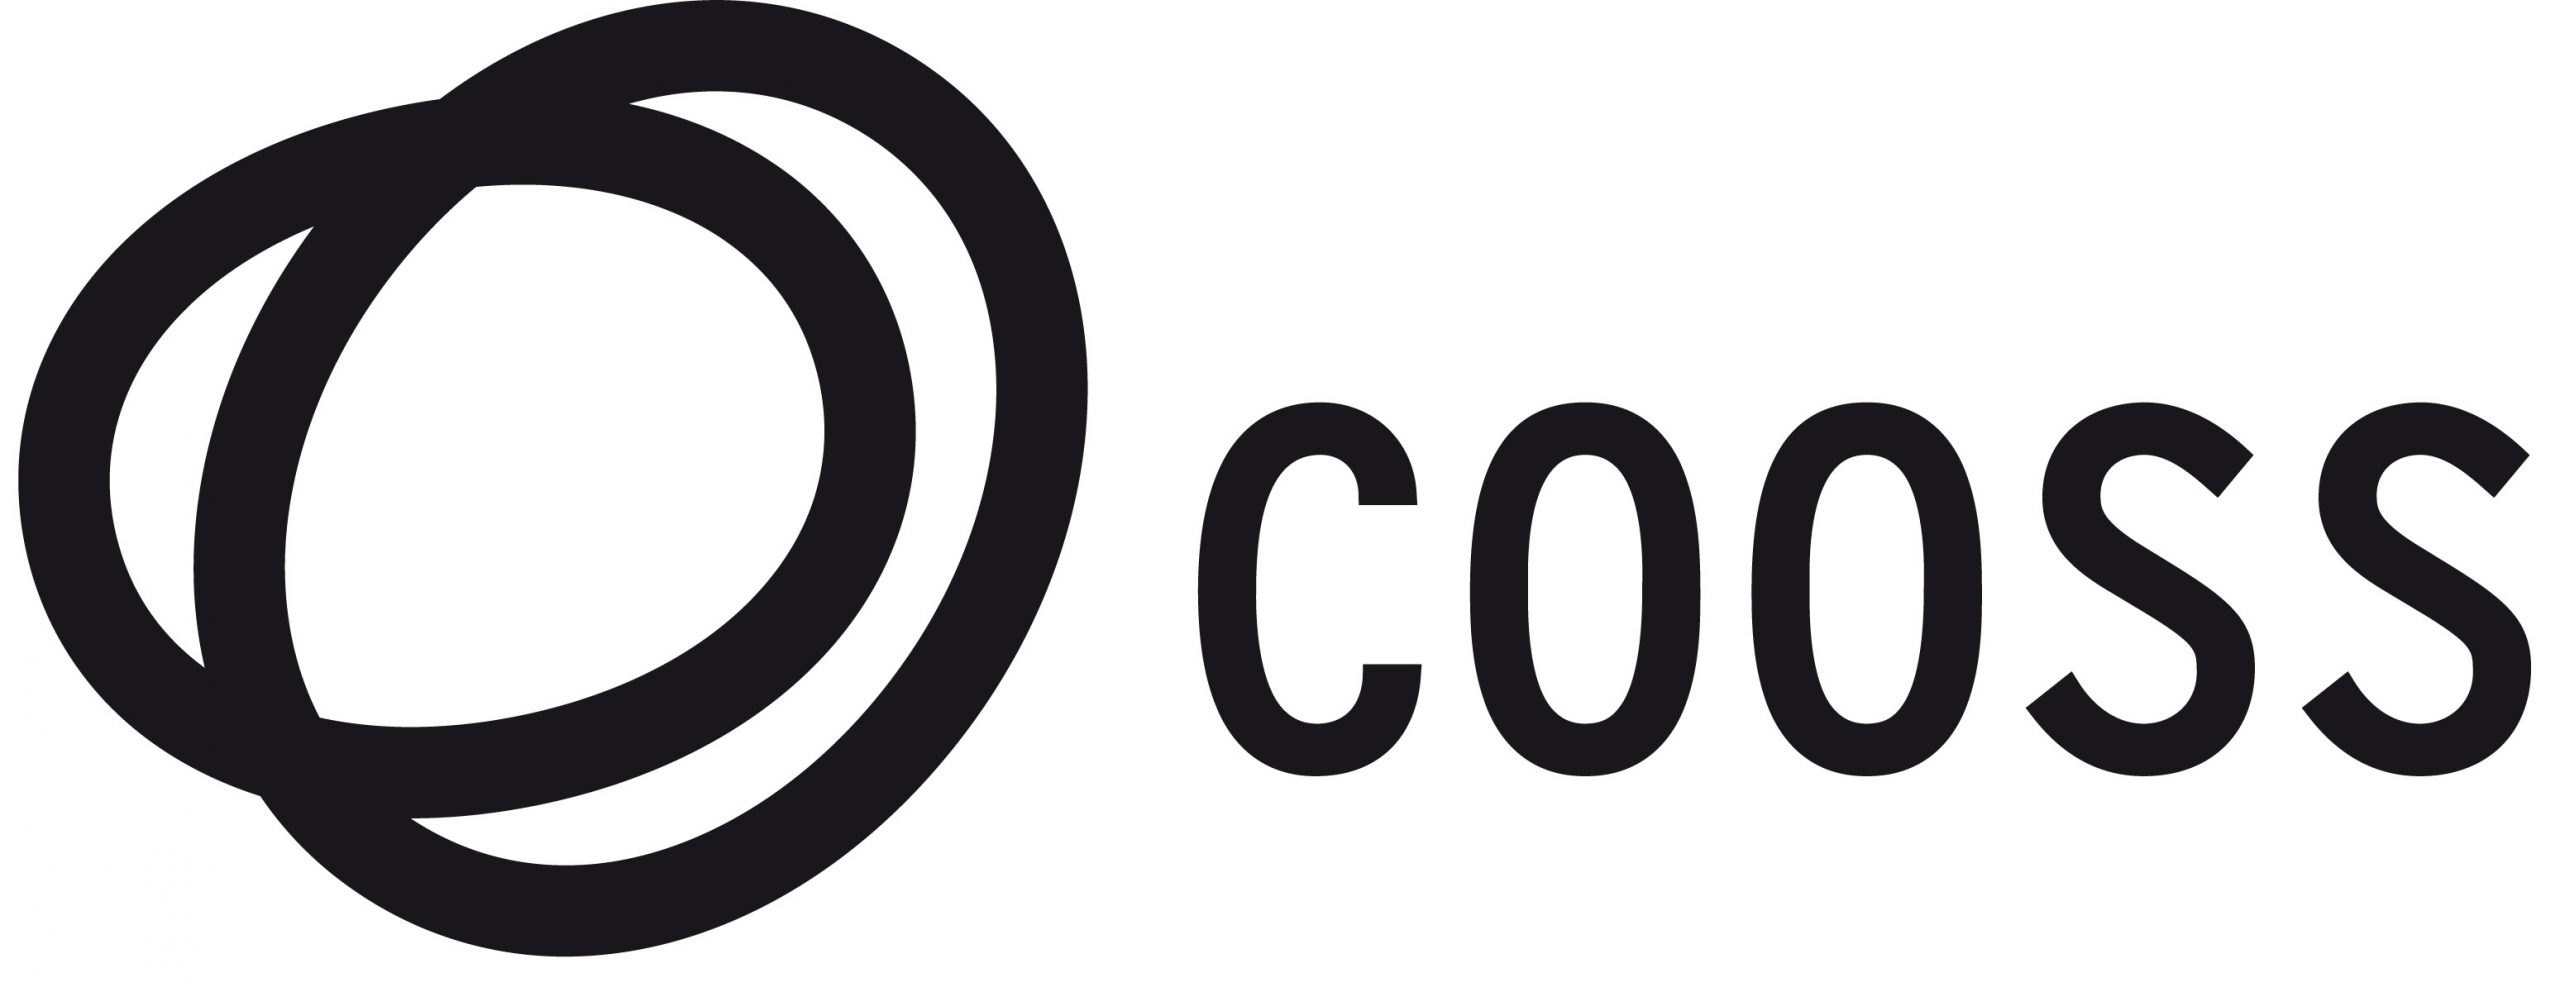 logo cooss marche